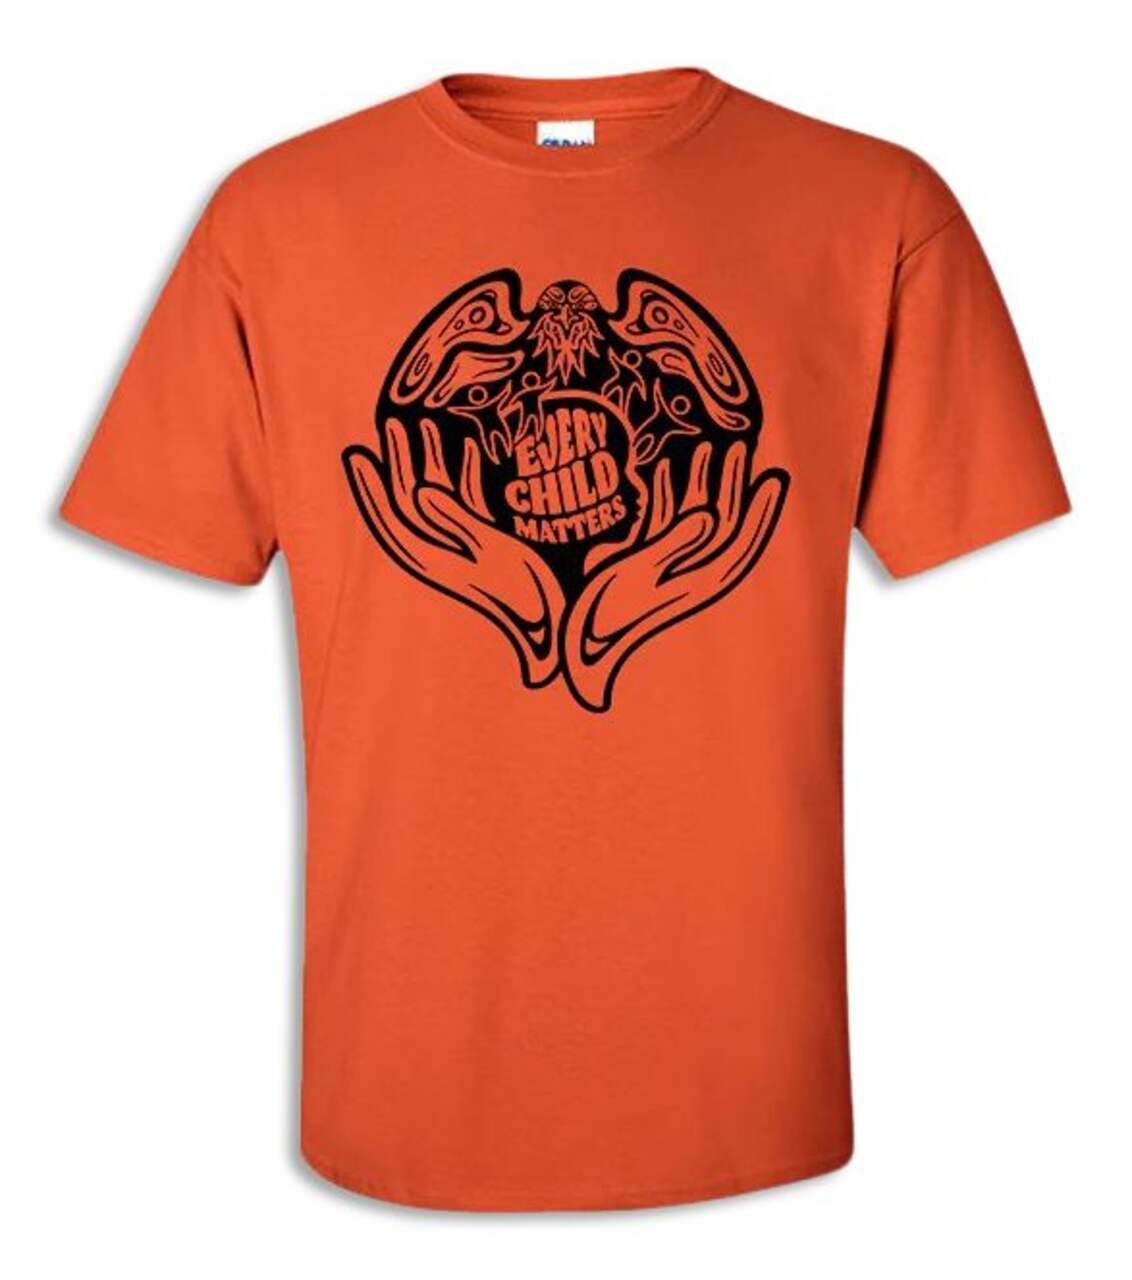 Fishing clothing/Fishing shirt/Fishing accessories Kids T-Shirt for Sale  by Dear Garment